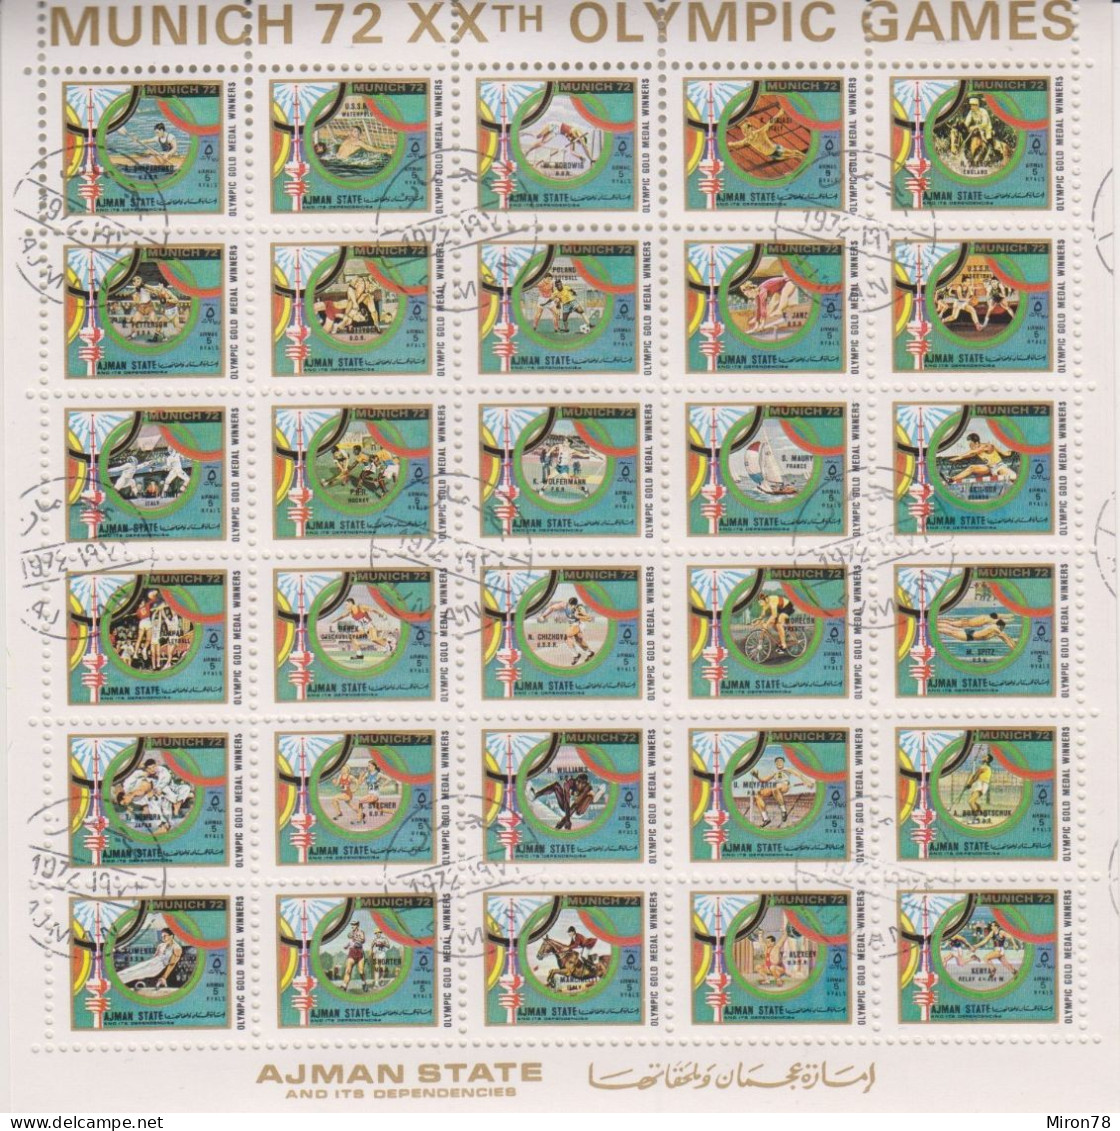 AJMAN OLYMPIC GAMES MUNICH 1972 #1605-34 SH USED (MNH-MICHEL 150 EURO!!!) - Ohne Zuordnung